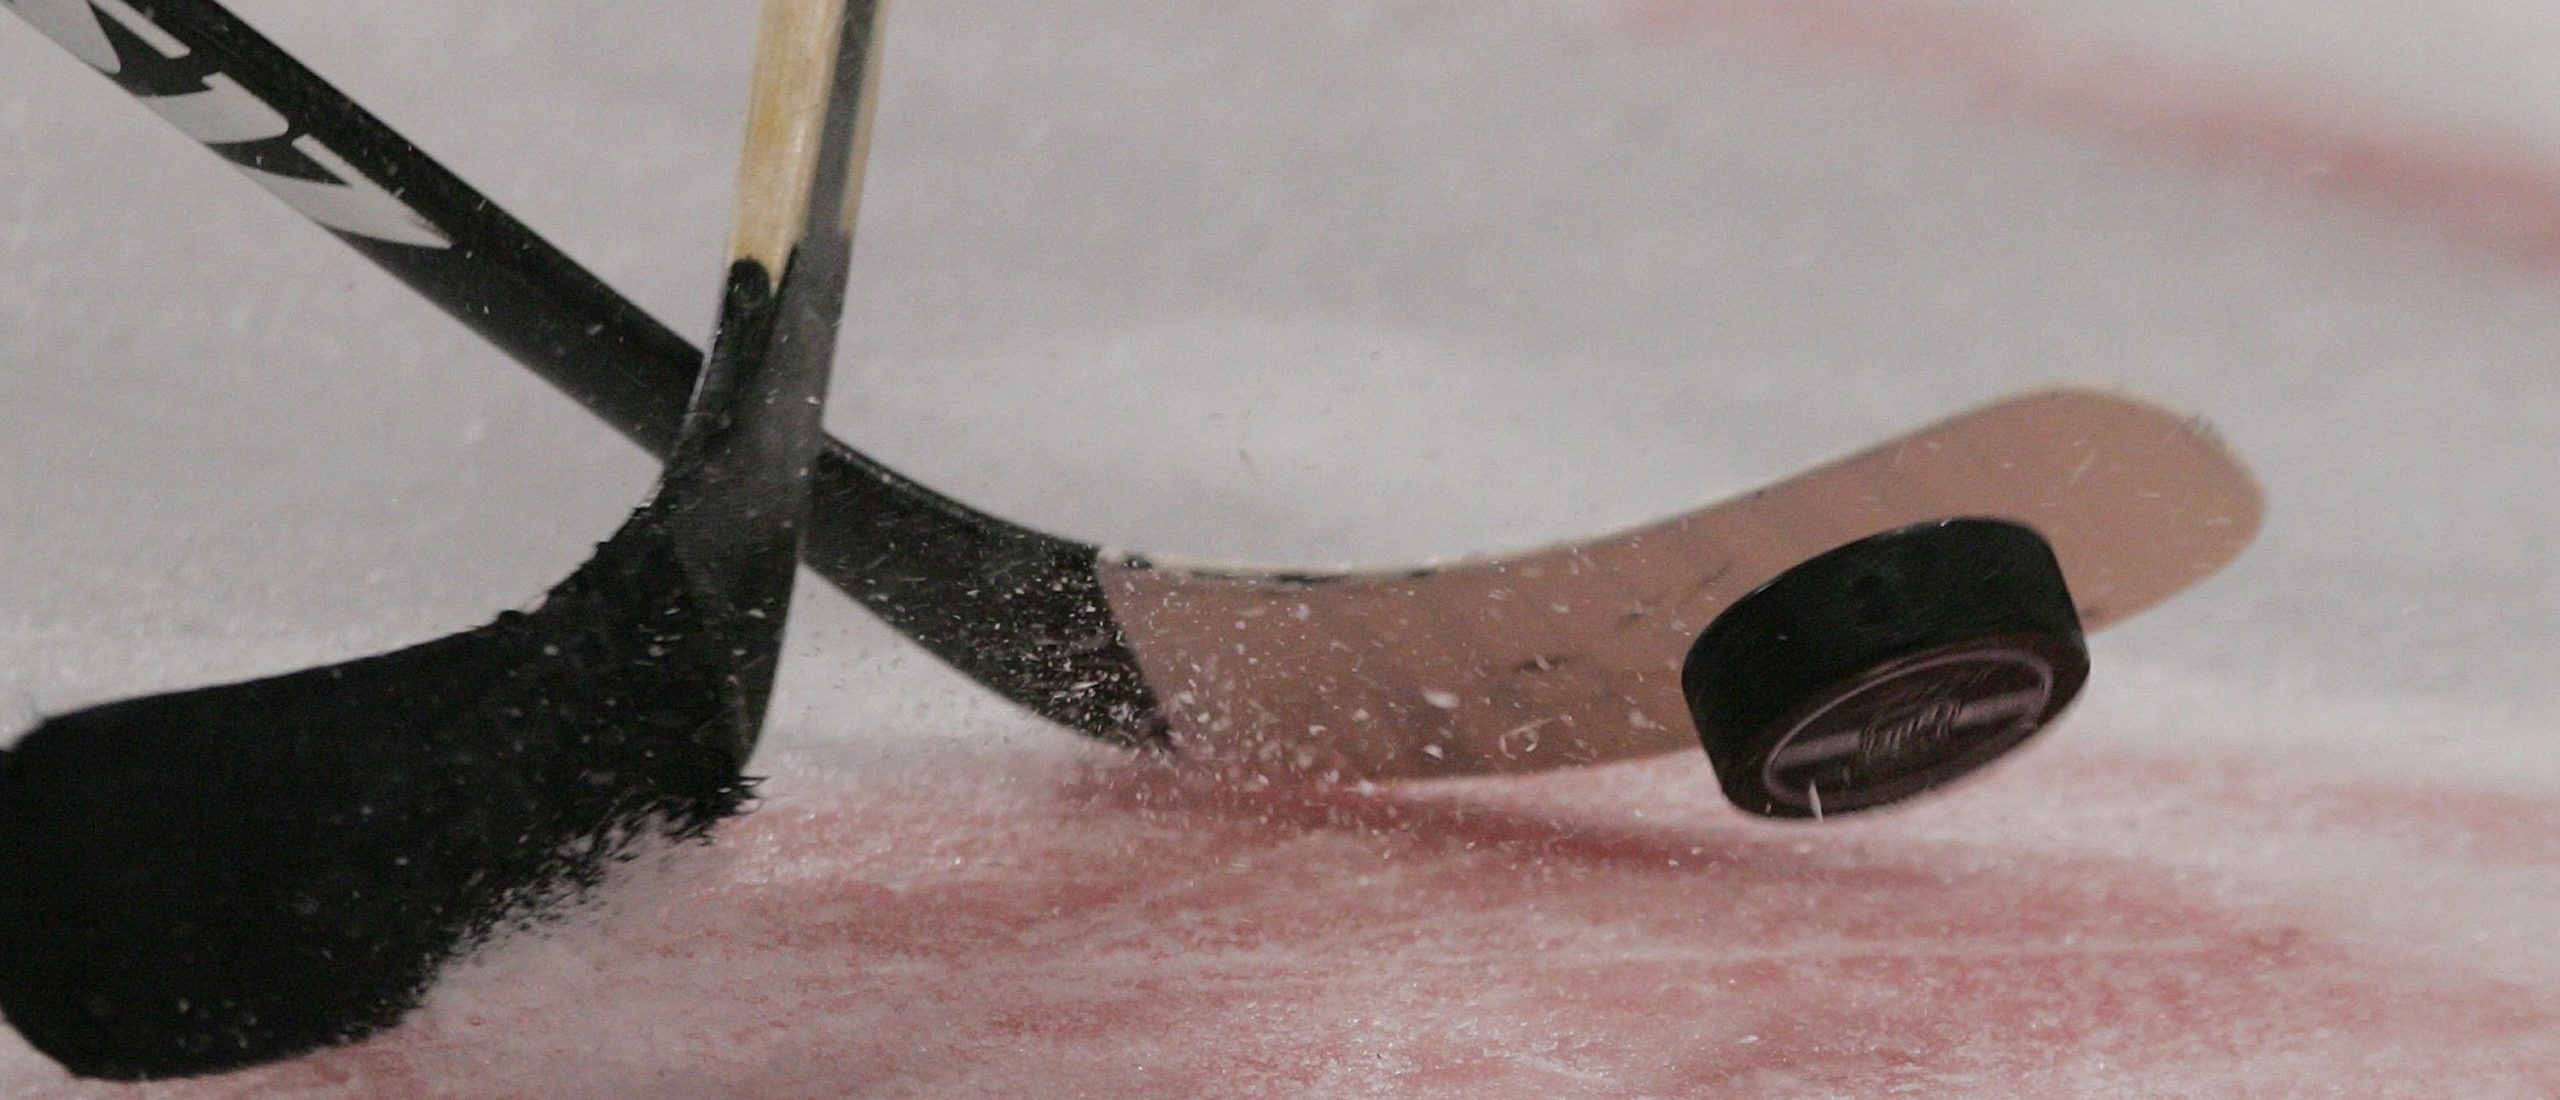 Hockey starlet Teddy Balkind killed after skate slashes neck in freak  accident - Daily Star